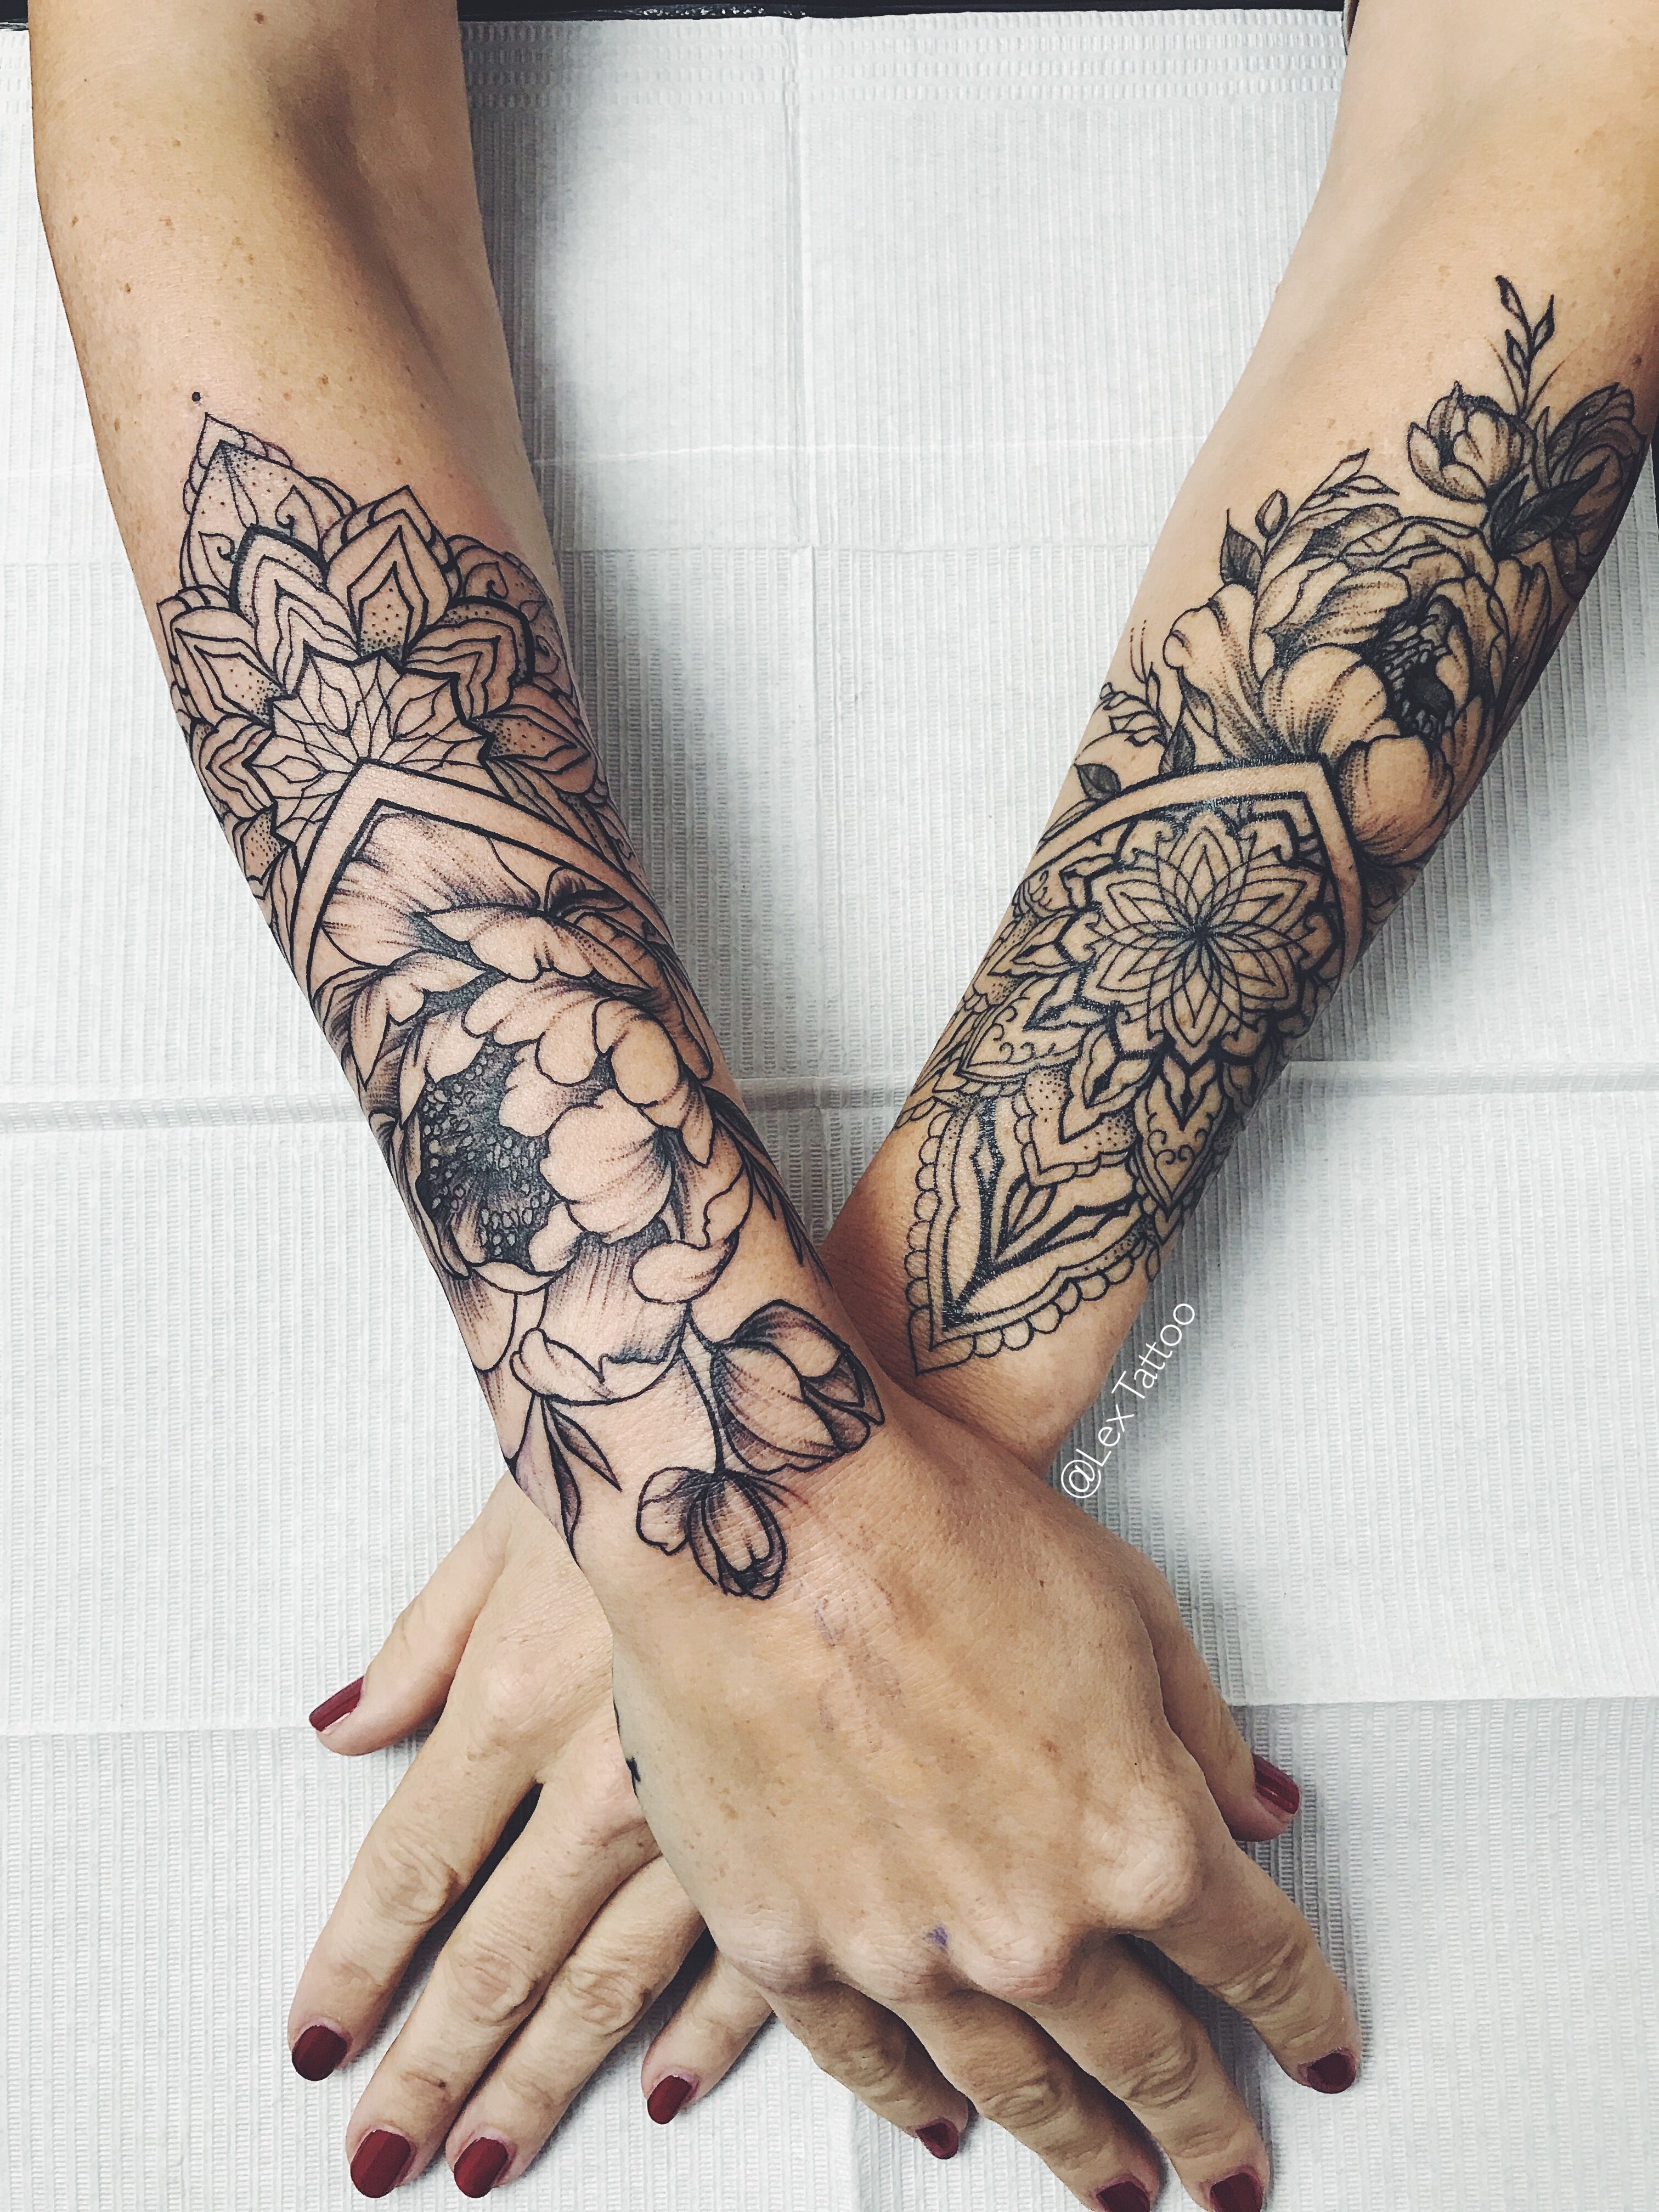 img/mandala-schulter-arm-tattoo-bedeutung-und-designs.jpg